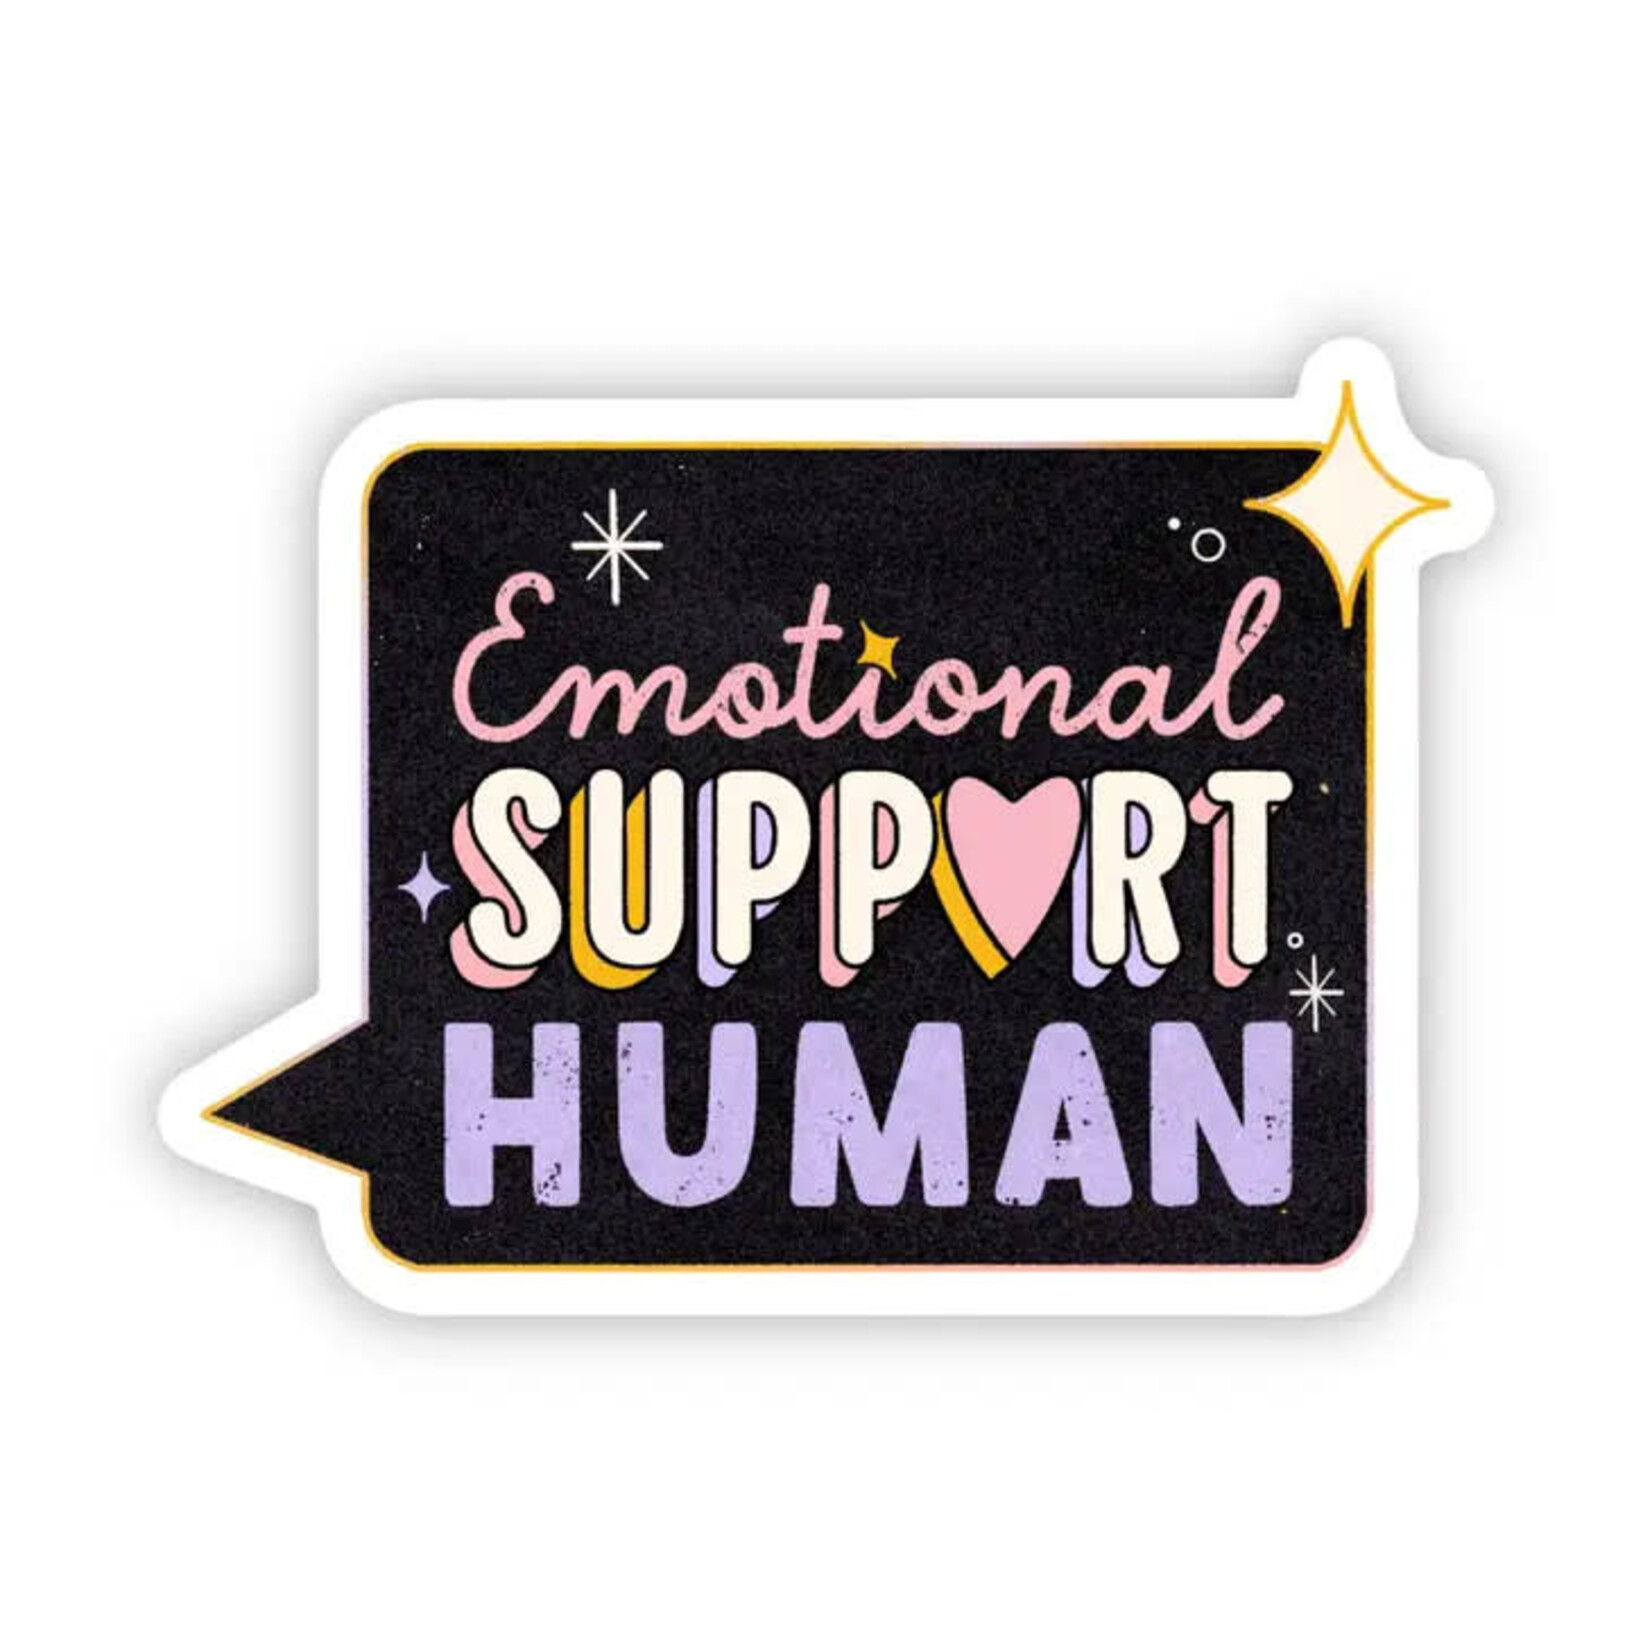 Big Moods Emotional Support Human Sticker